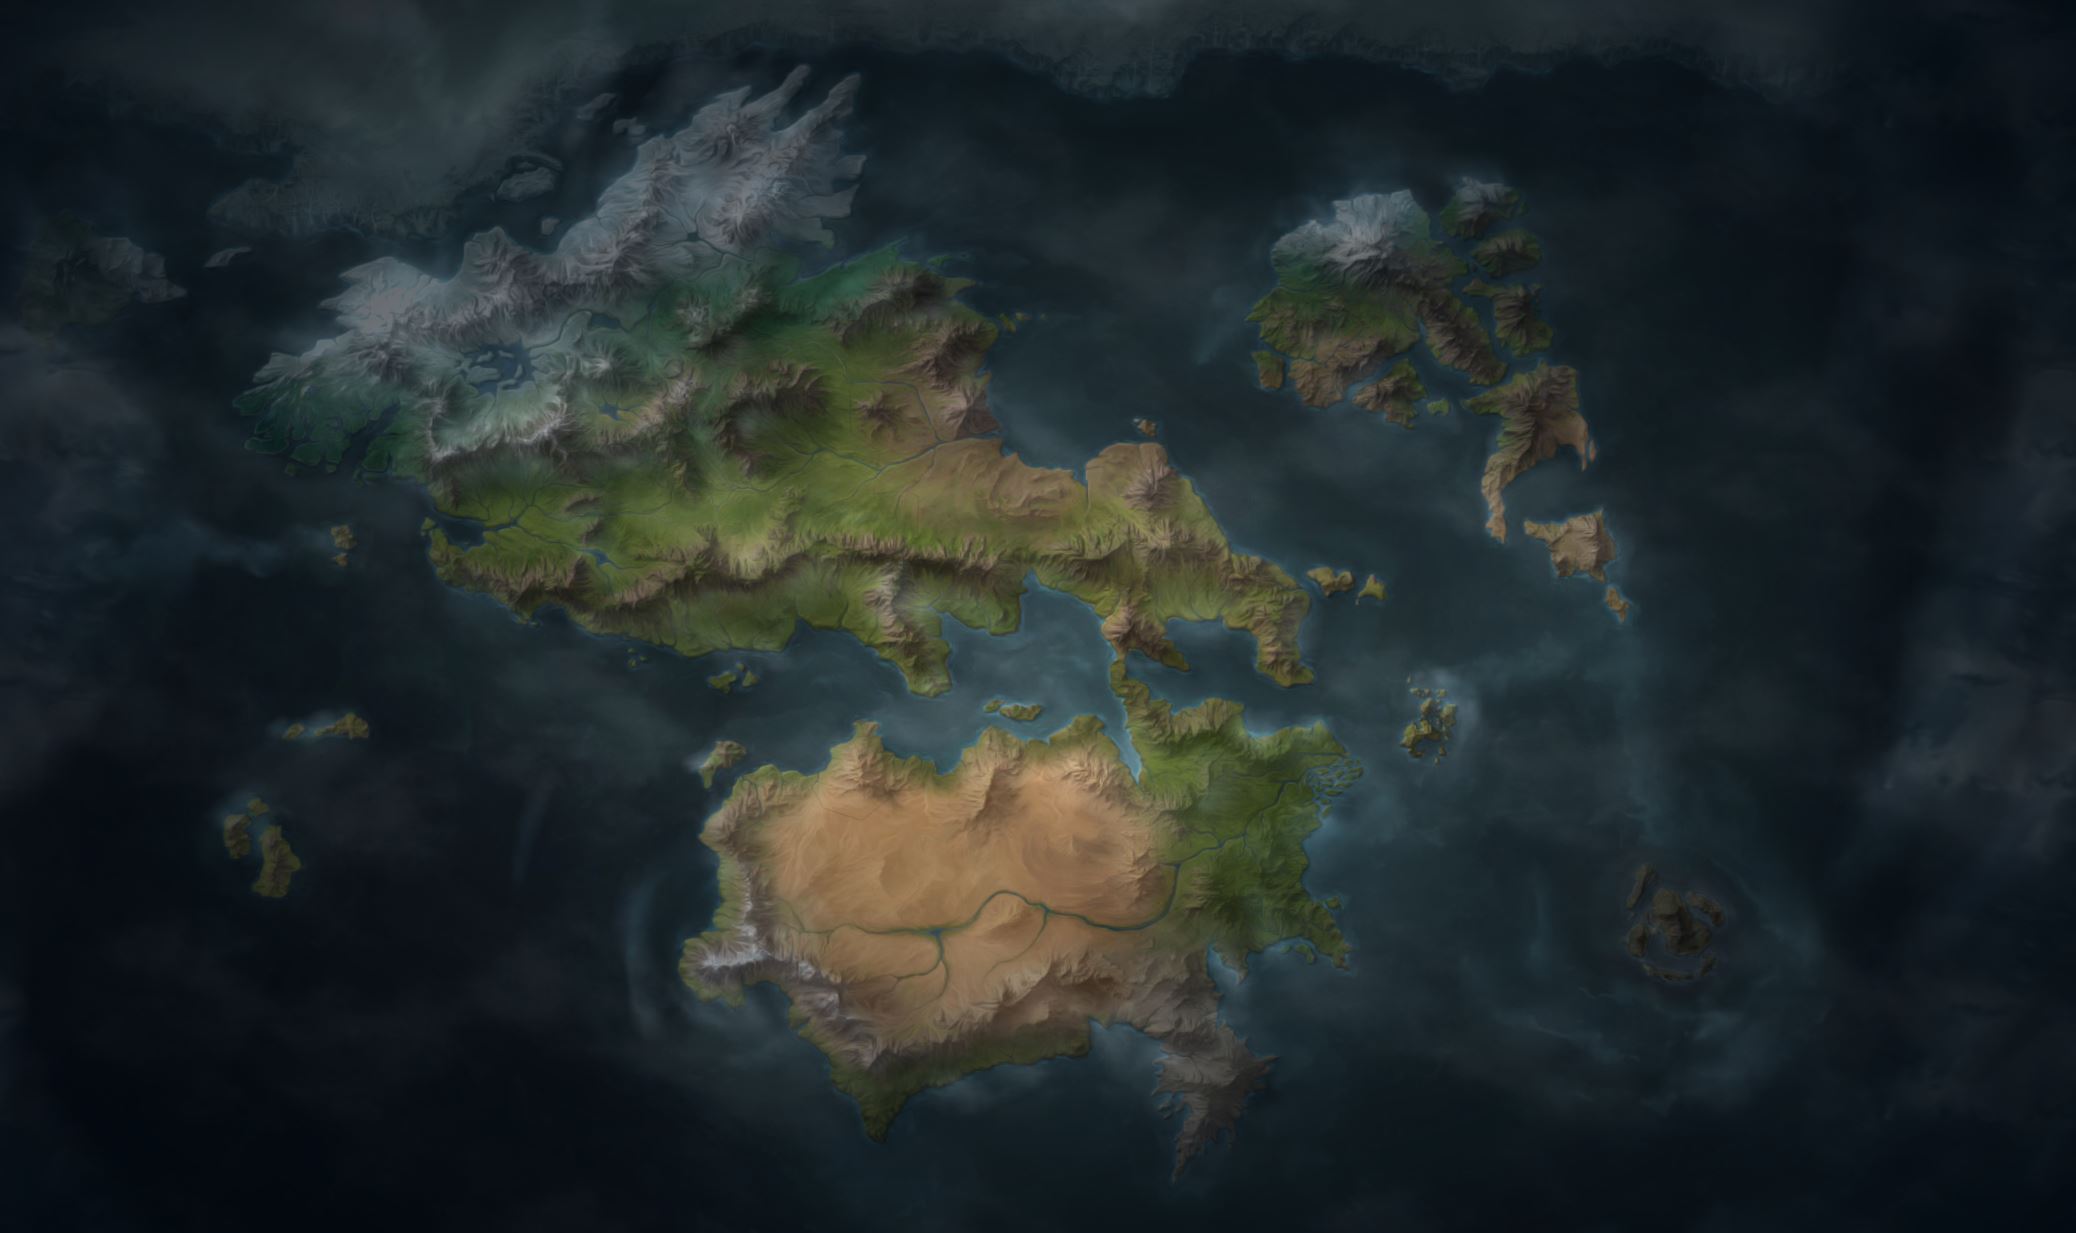 Why The World of Runeterra Needs An MMORPG